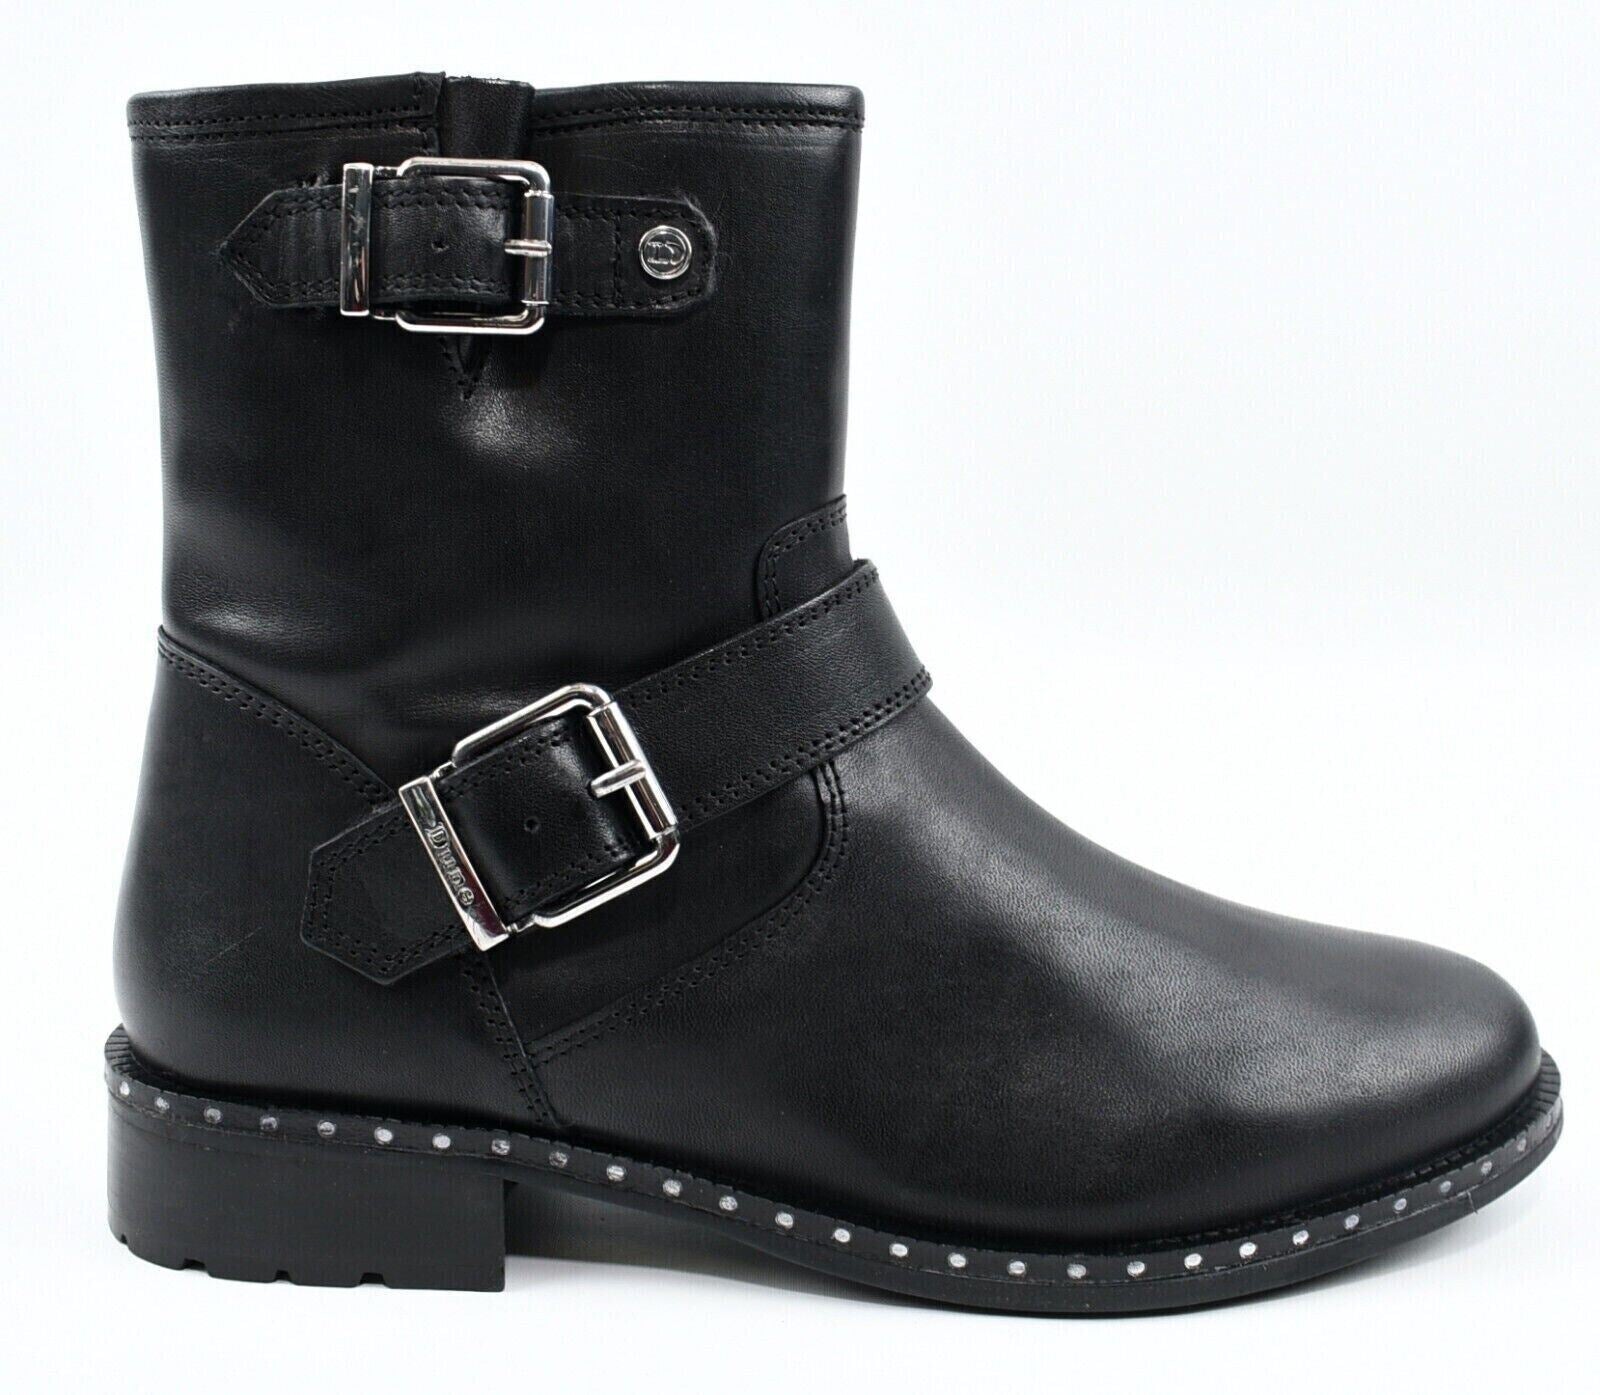 DUNE Women's RIKER 2 Boots, Genuine Leather, Black, size UK 5 /EU 38